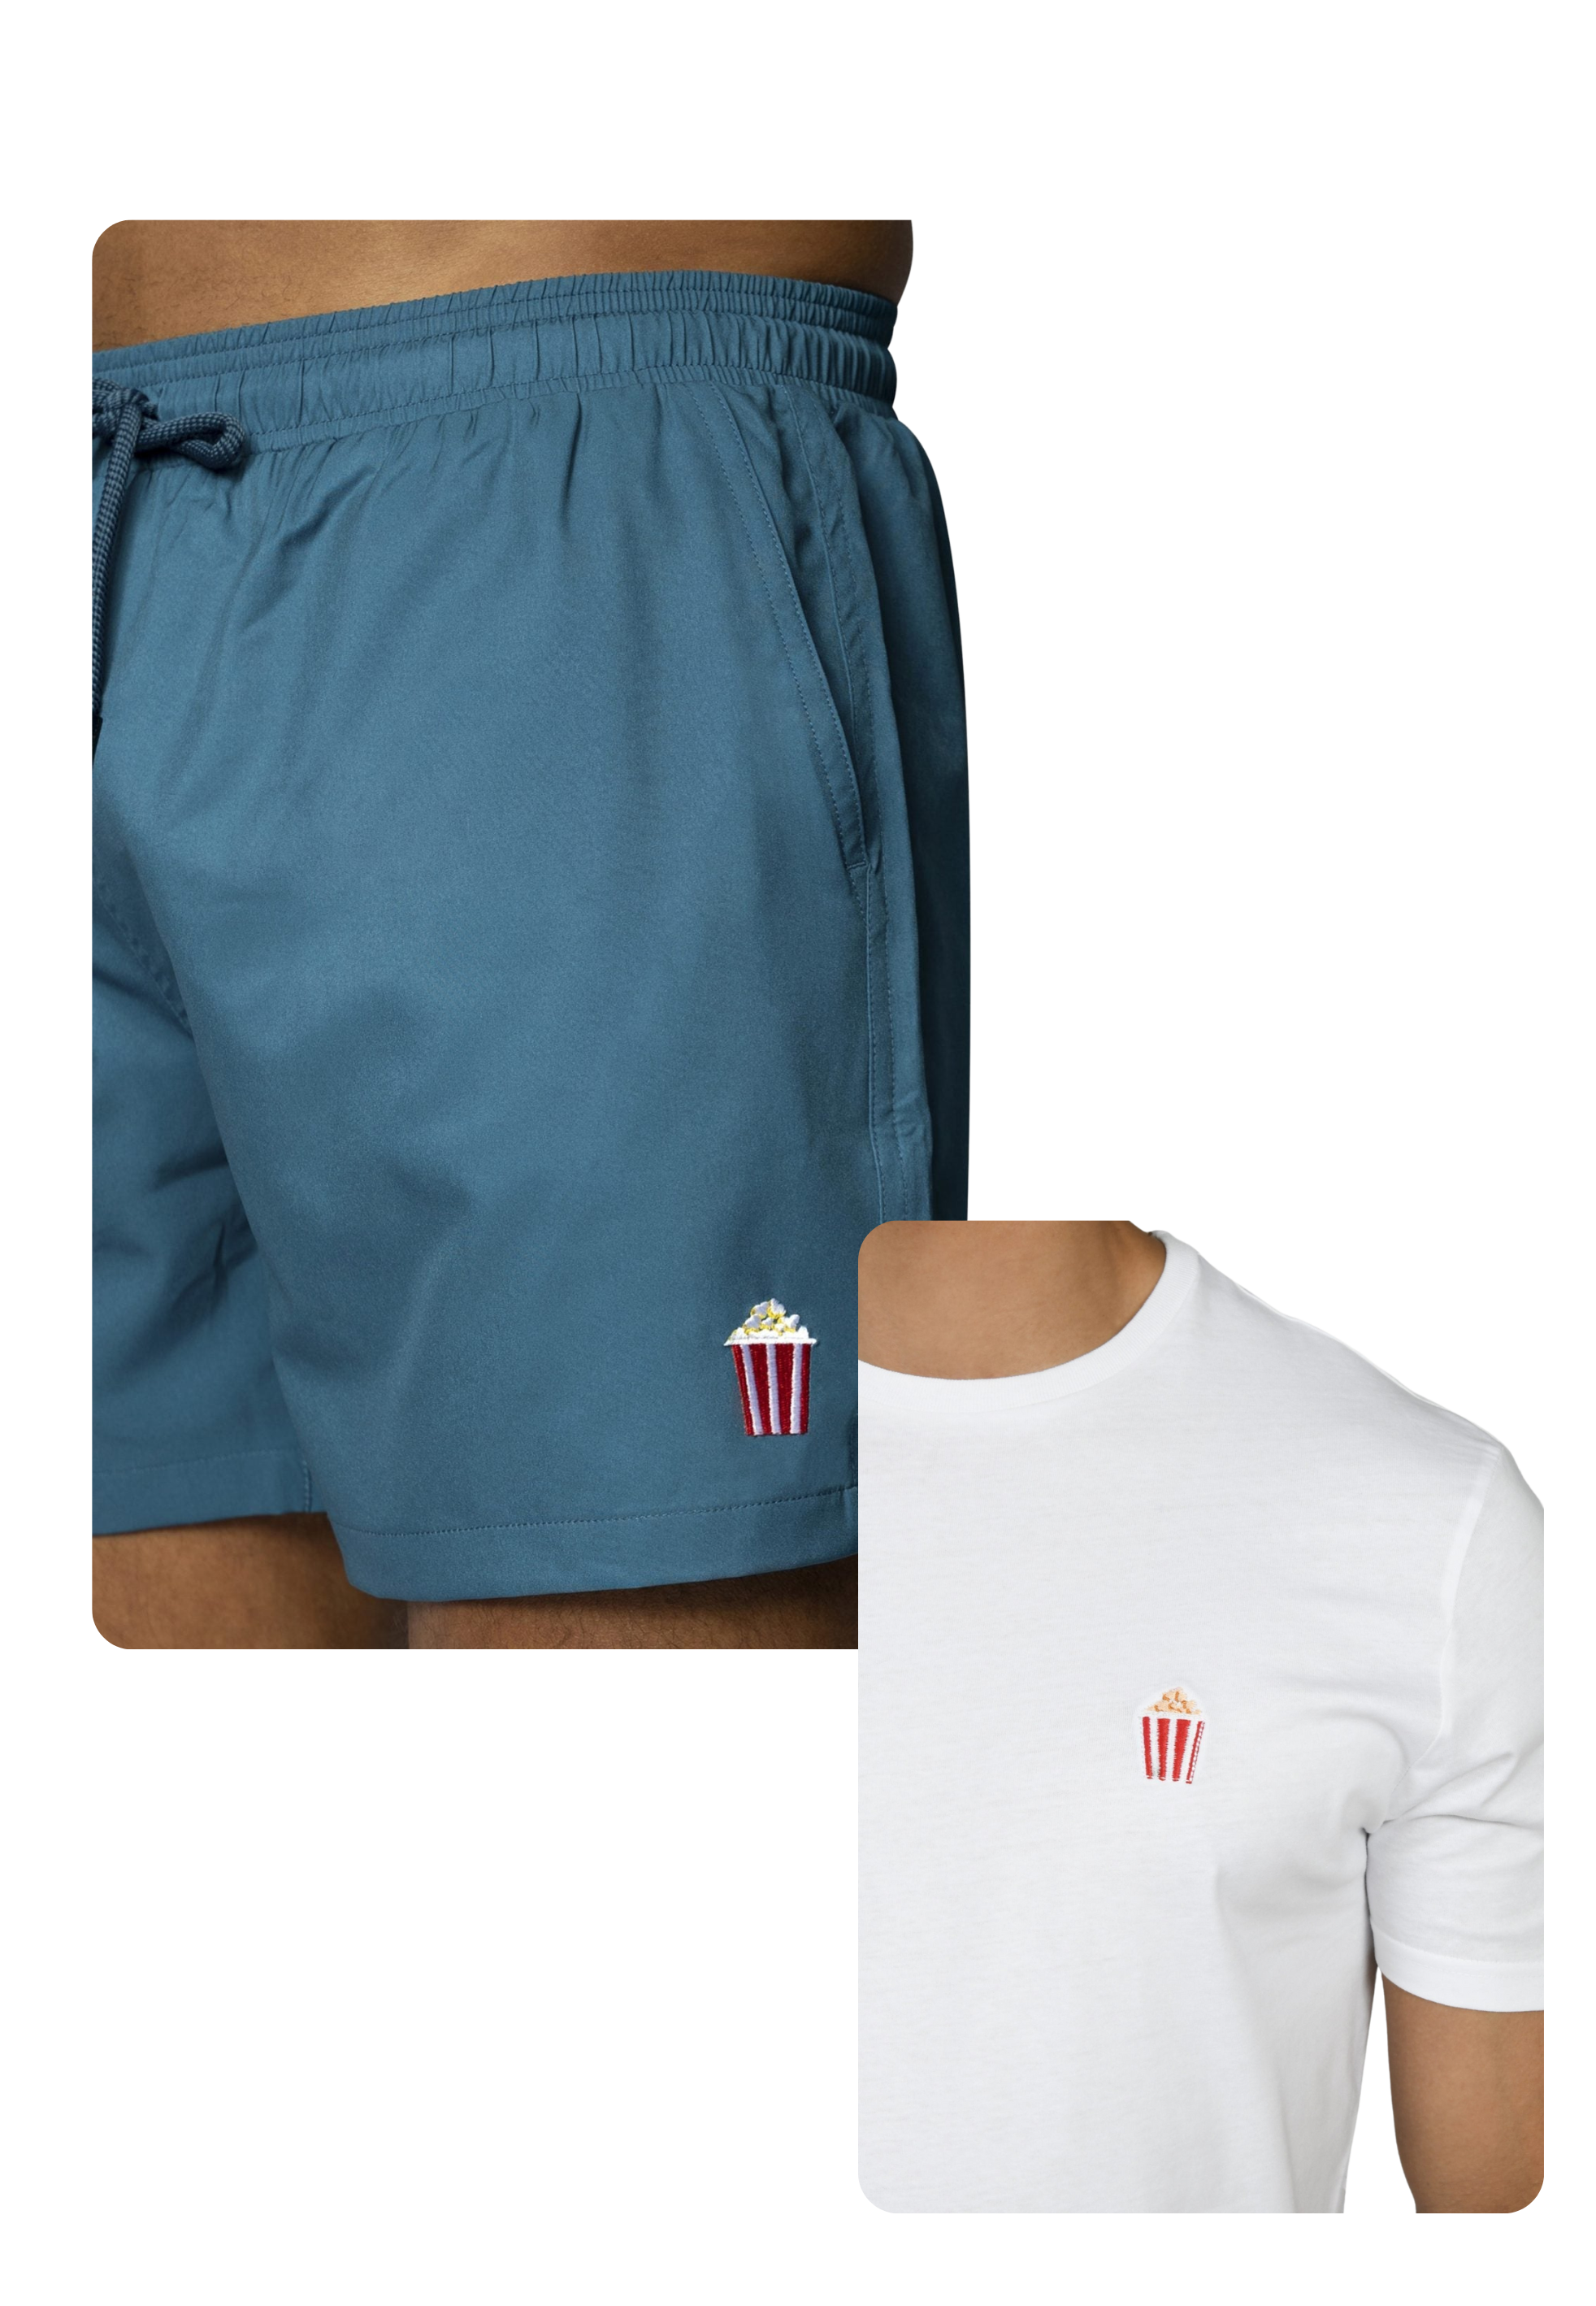 Popcorn Coco Swim Trunks & T-shirt Bundle